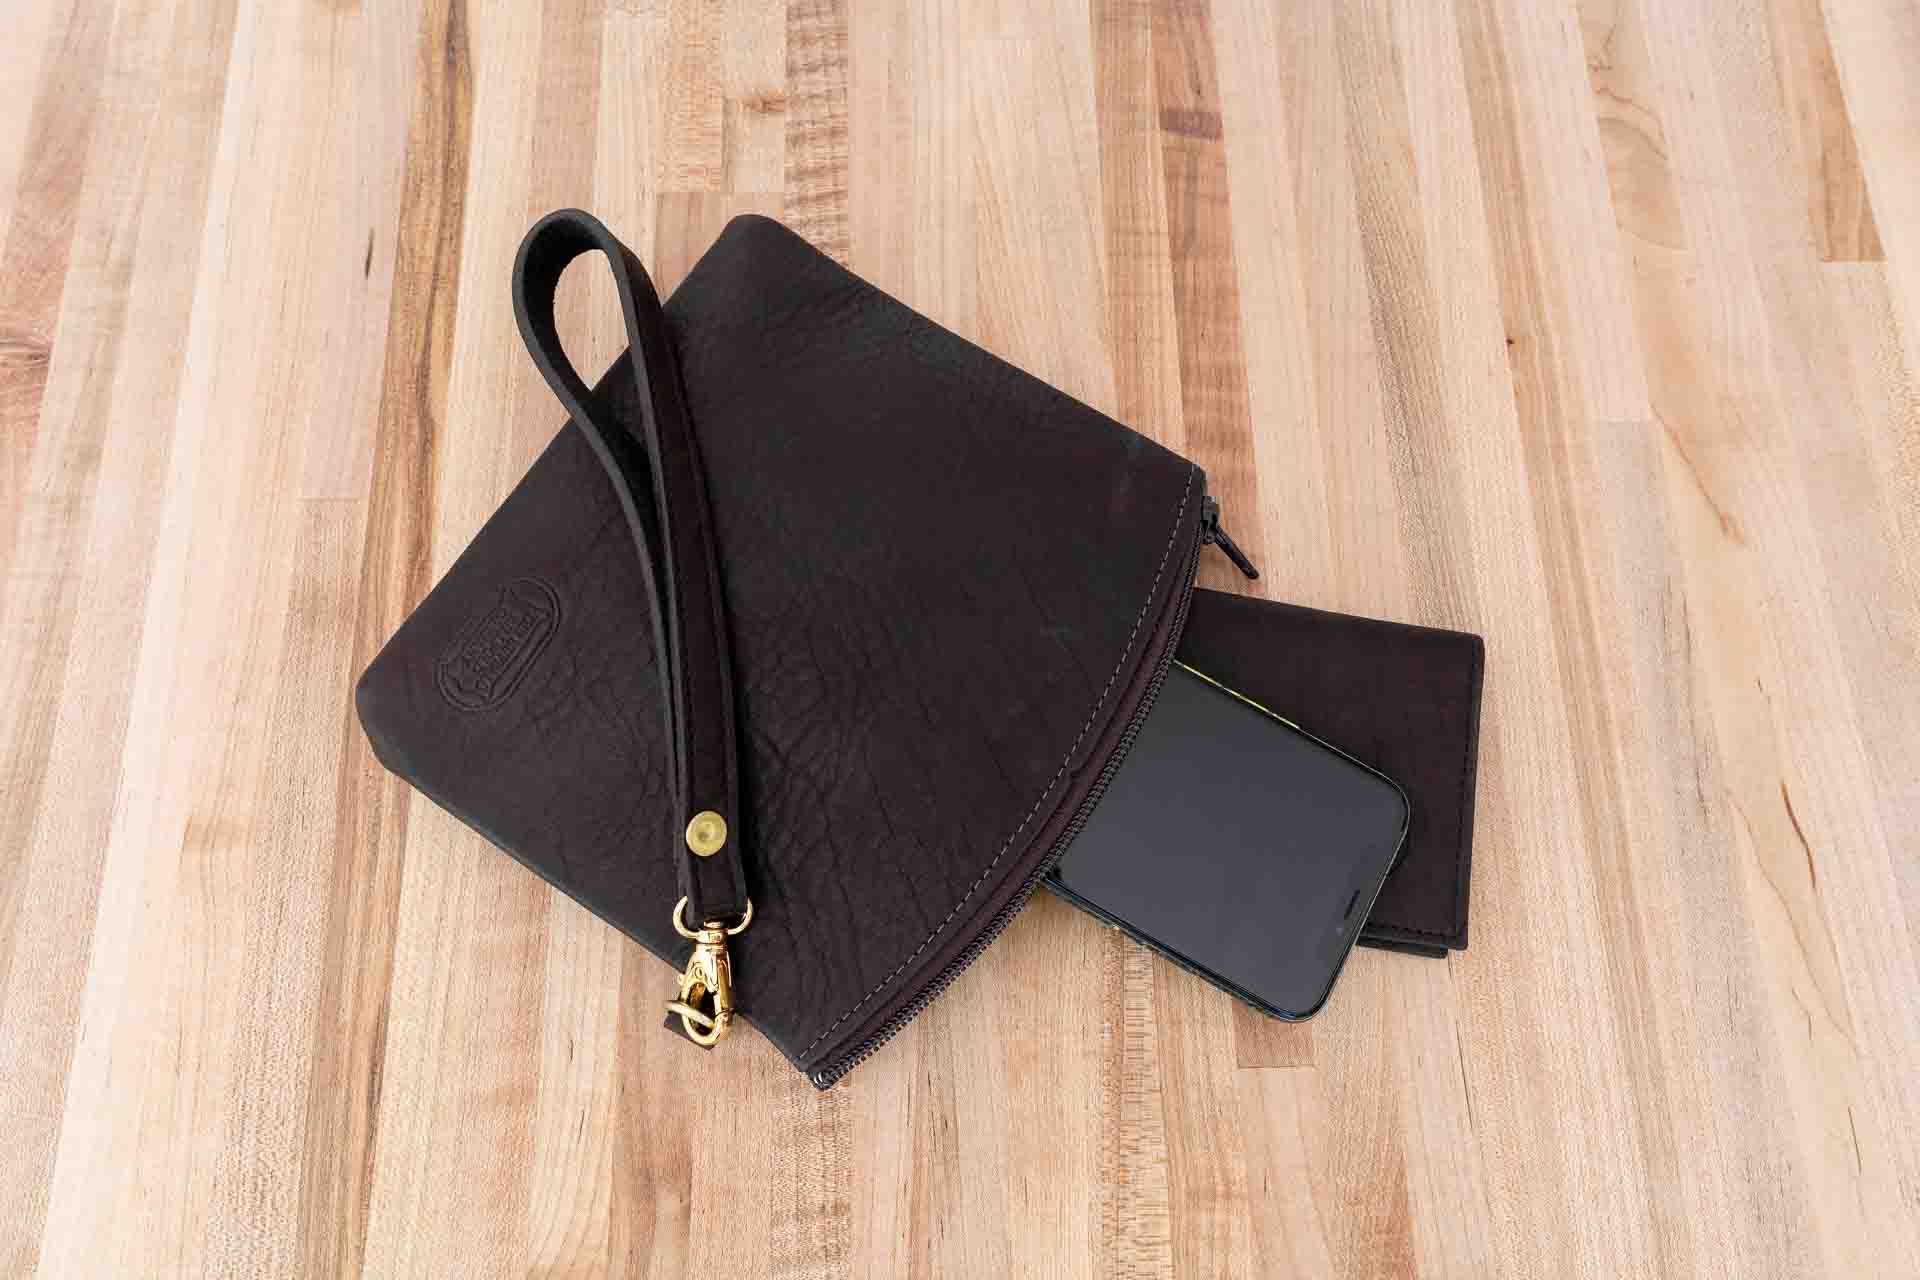 Brown Leather Wristlet Pouch - Wrist Bag | Buffalo Billfold Company